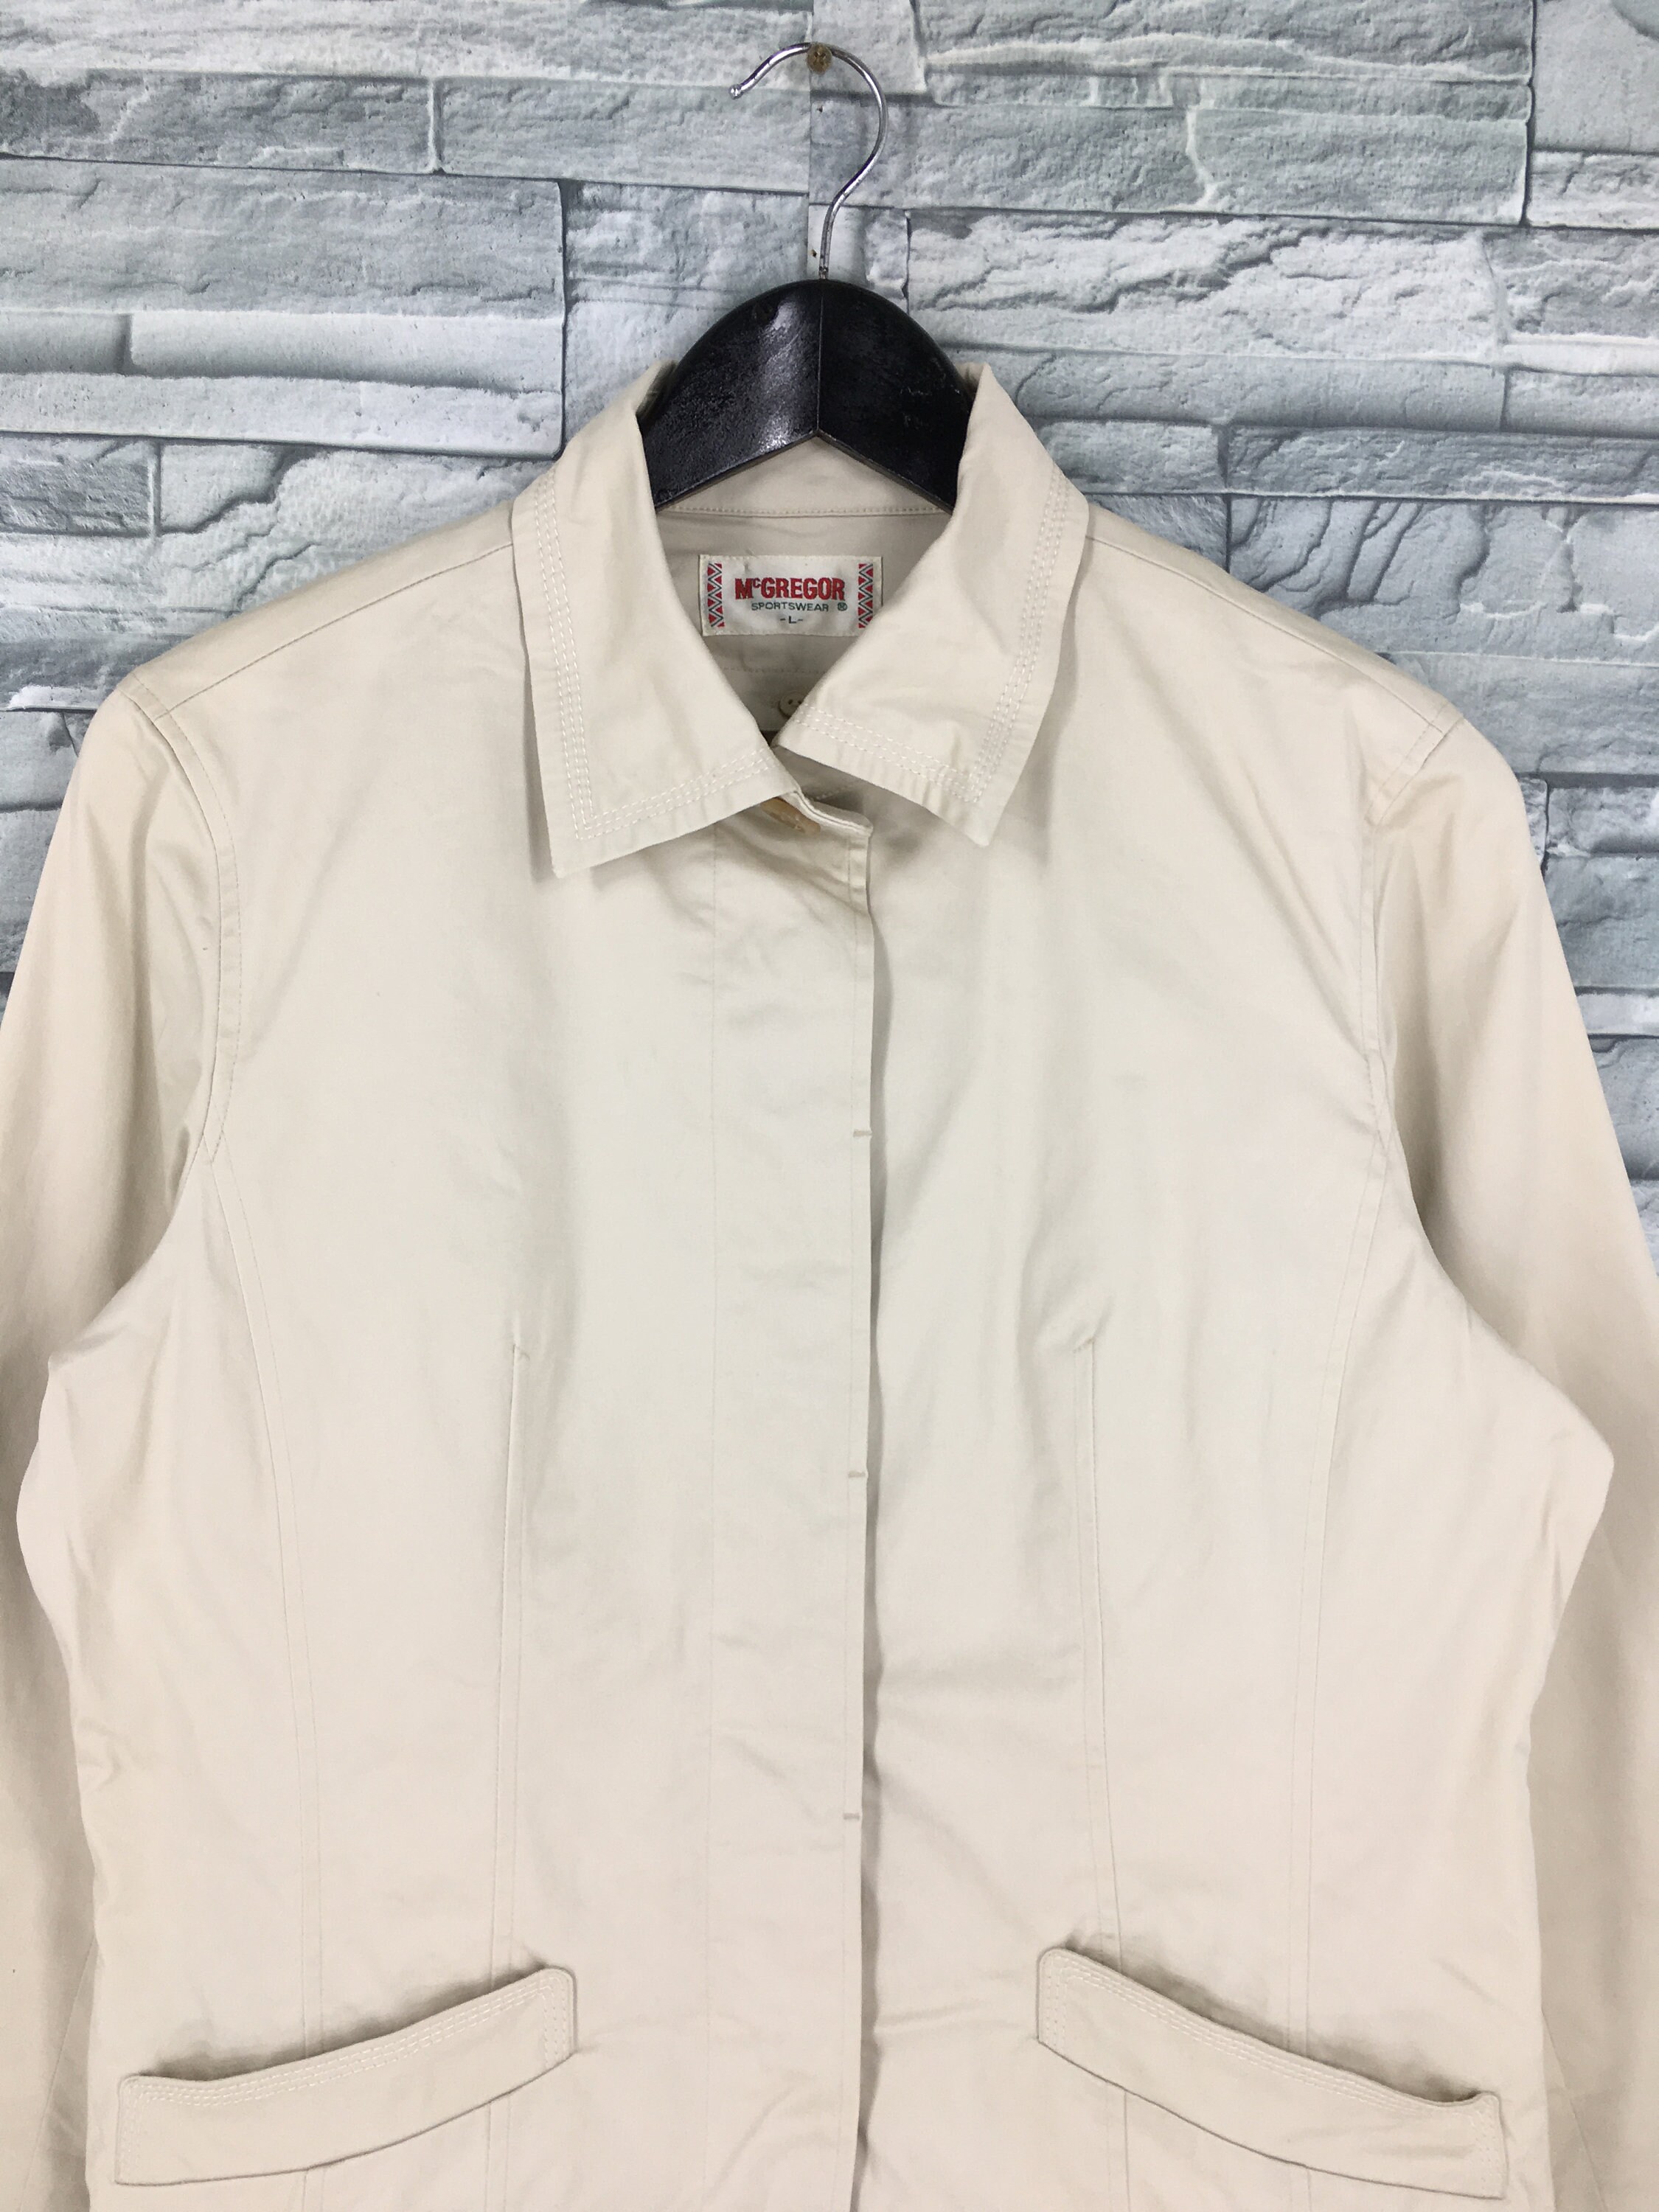 Mcgregor Workers Casual Cotton Jacket Beige Large Vintage - Etsy